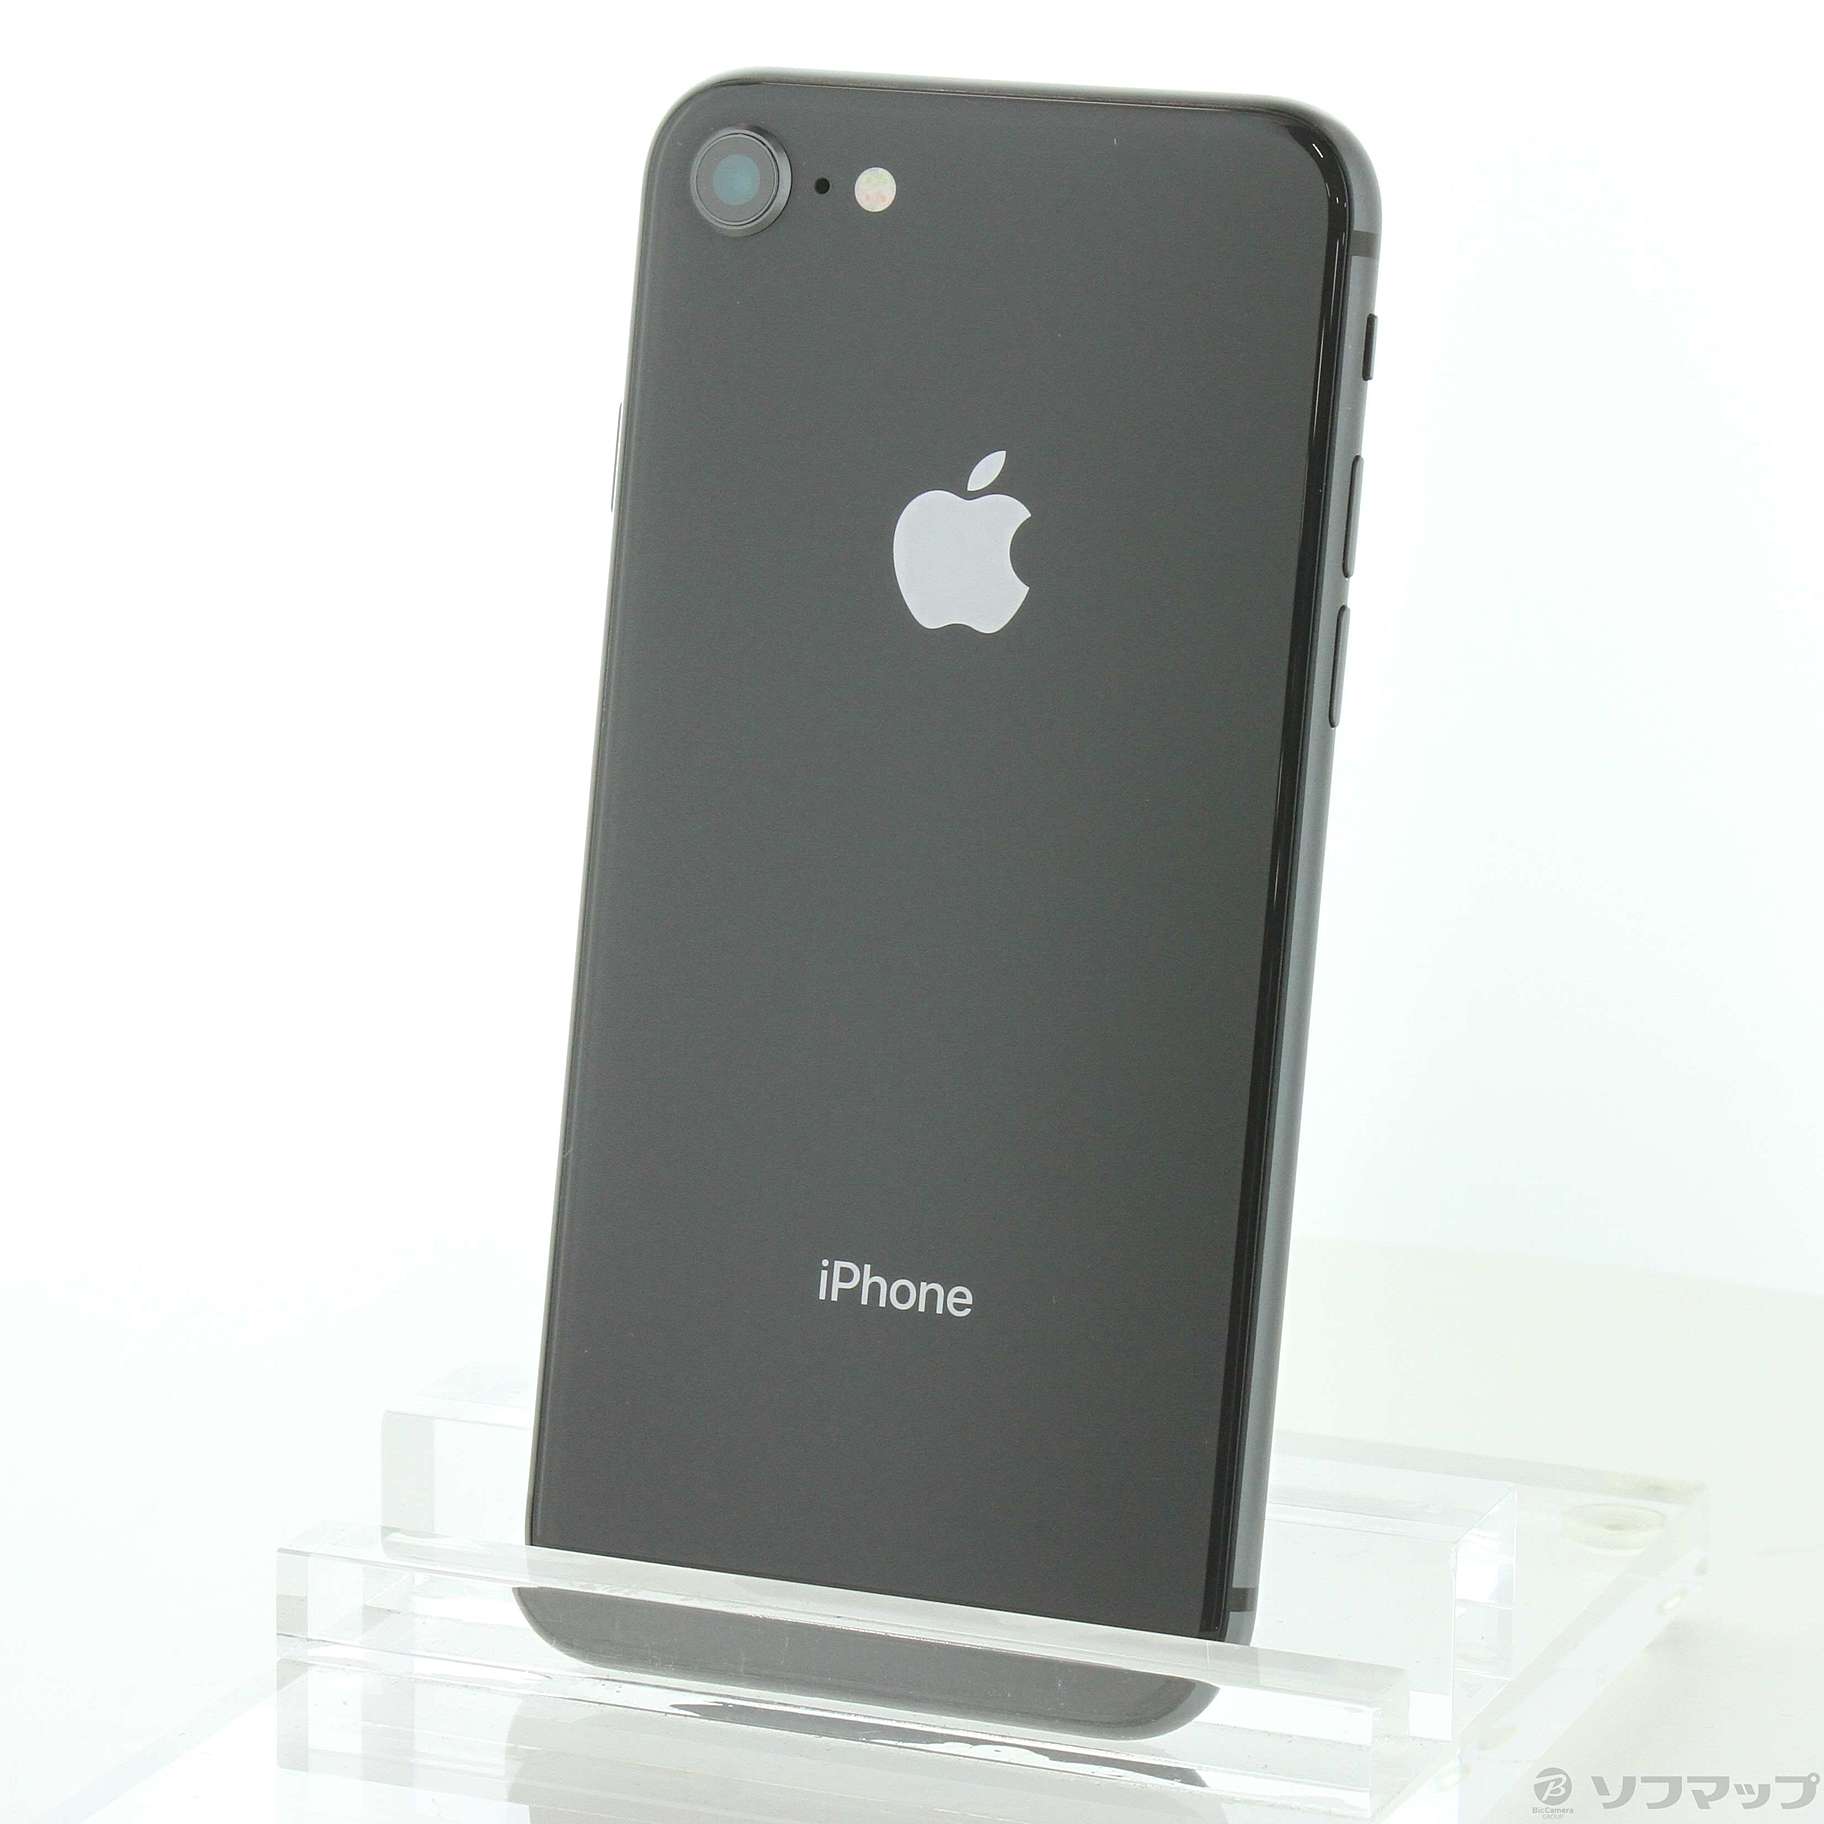 iPhone Space Gray 64 GB SIMフリー